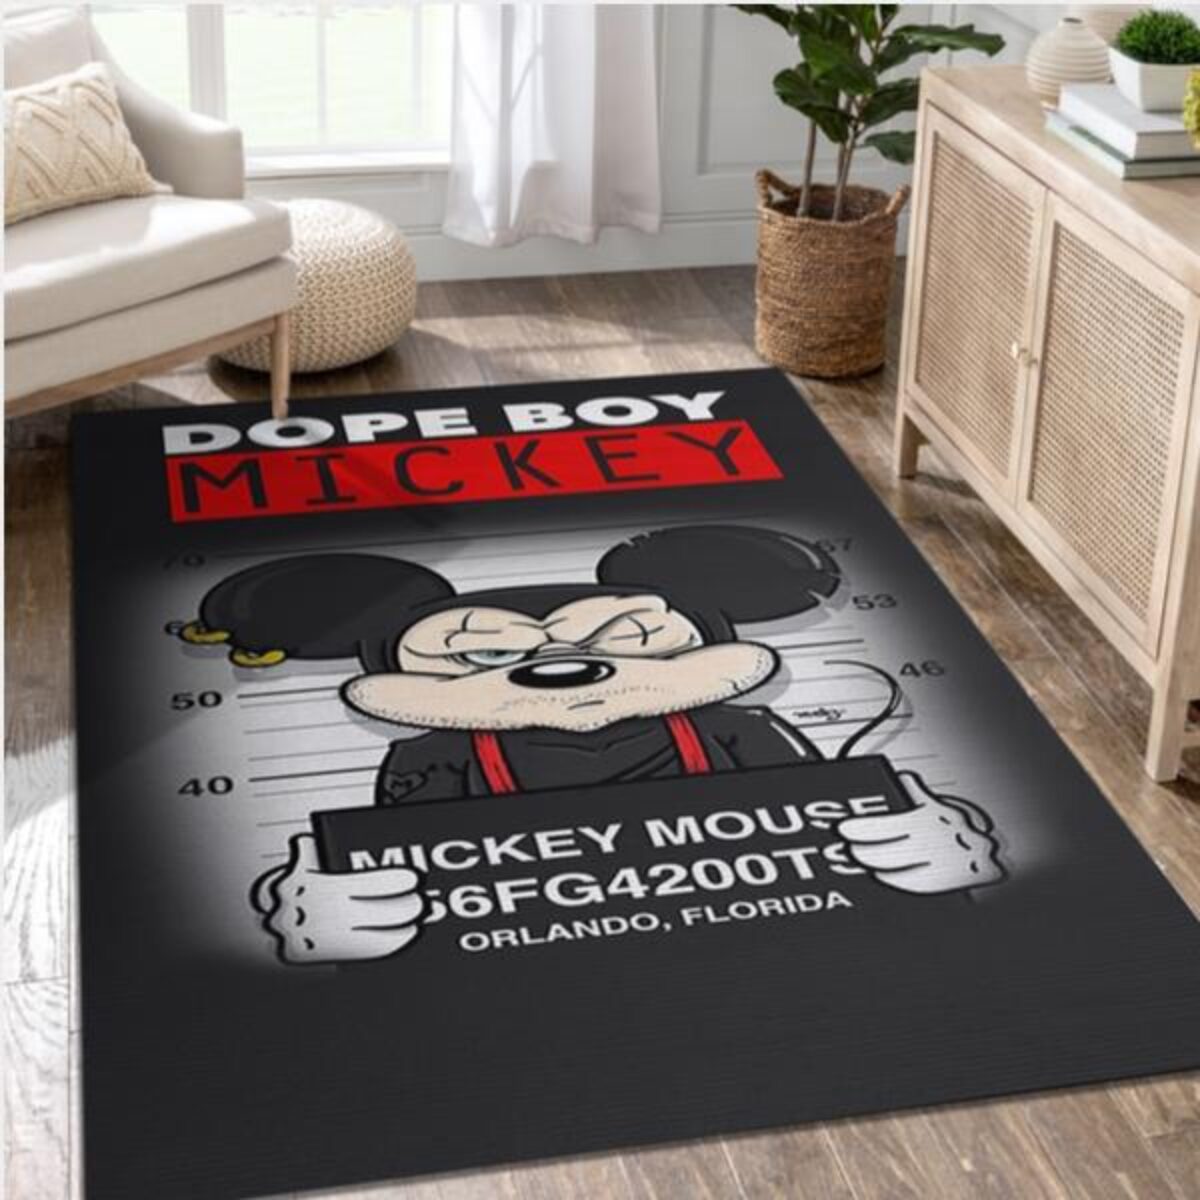 Mickey Mouse Supreme Area Rug Bedroom Floor Decor